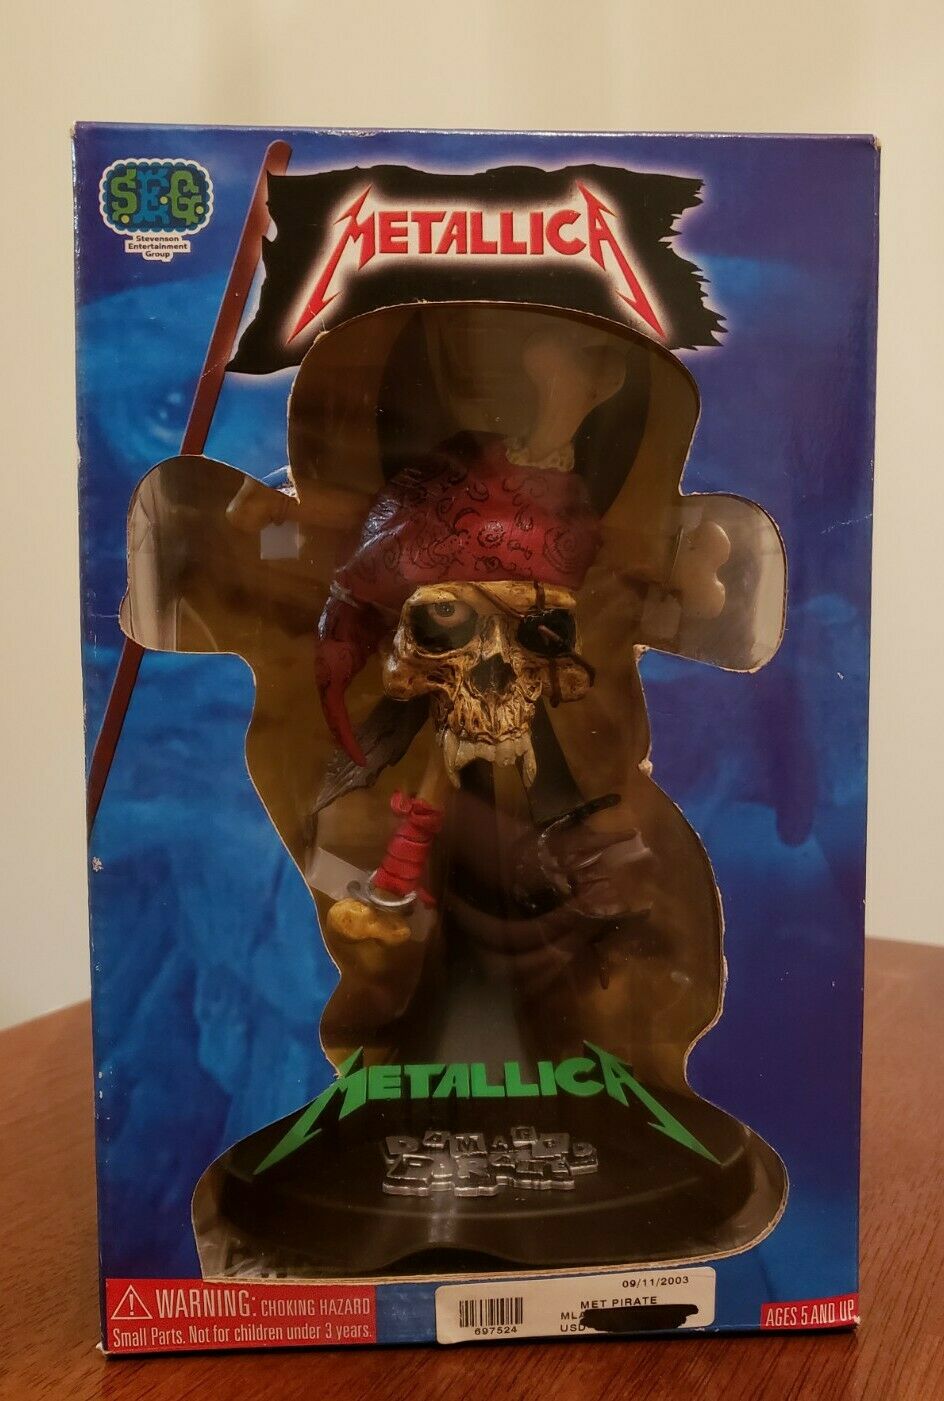 2003 Metallica Damaged Pirate By Seg Original Sealed Box Giant Master Of Puppets